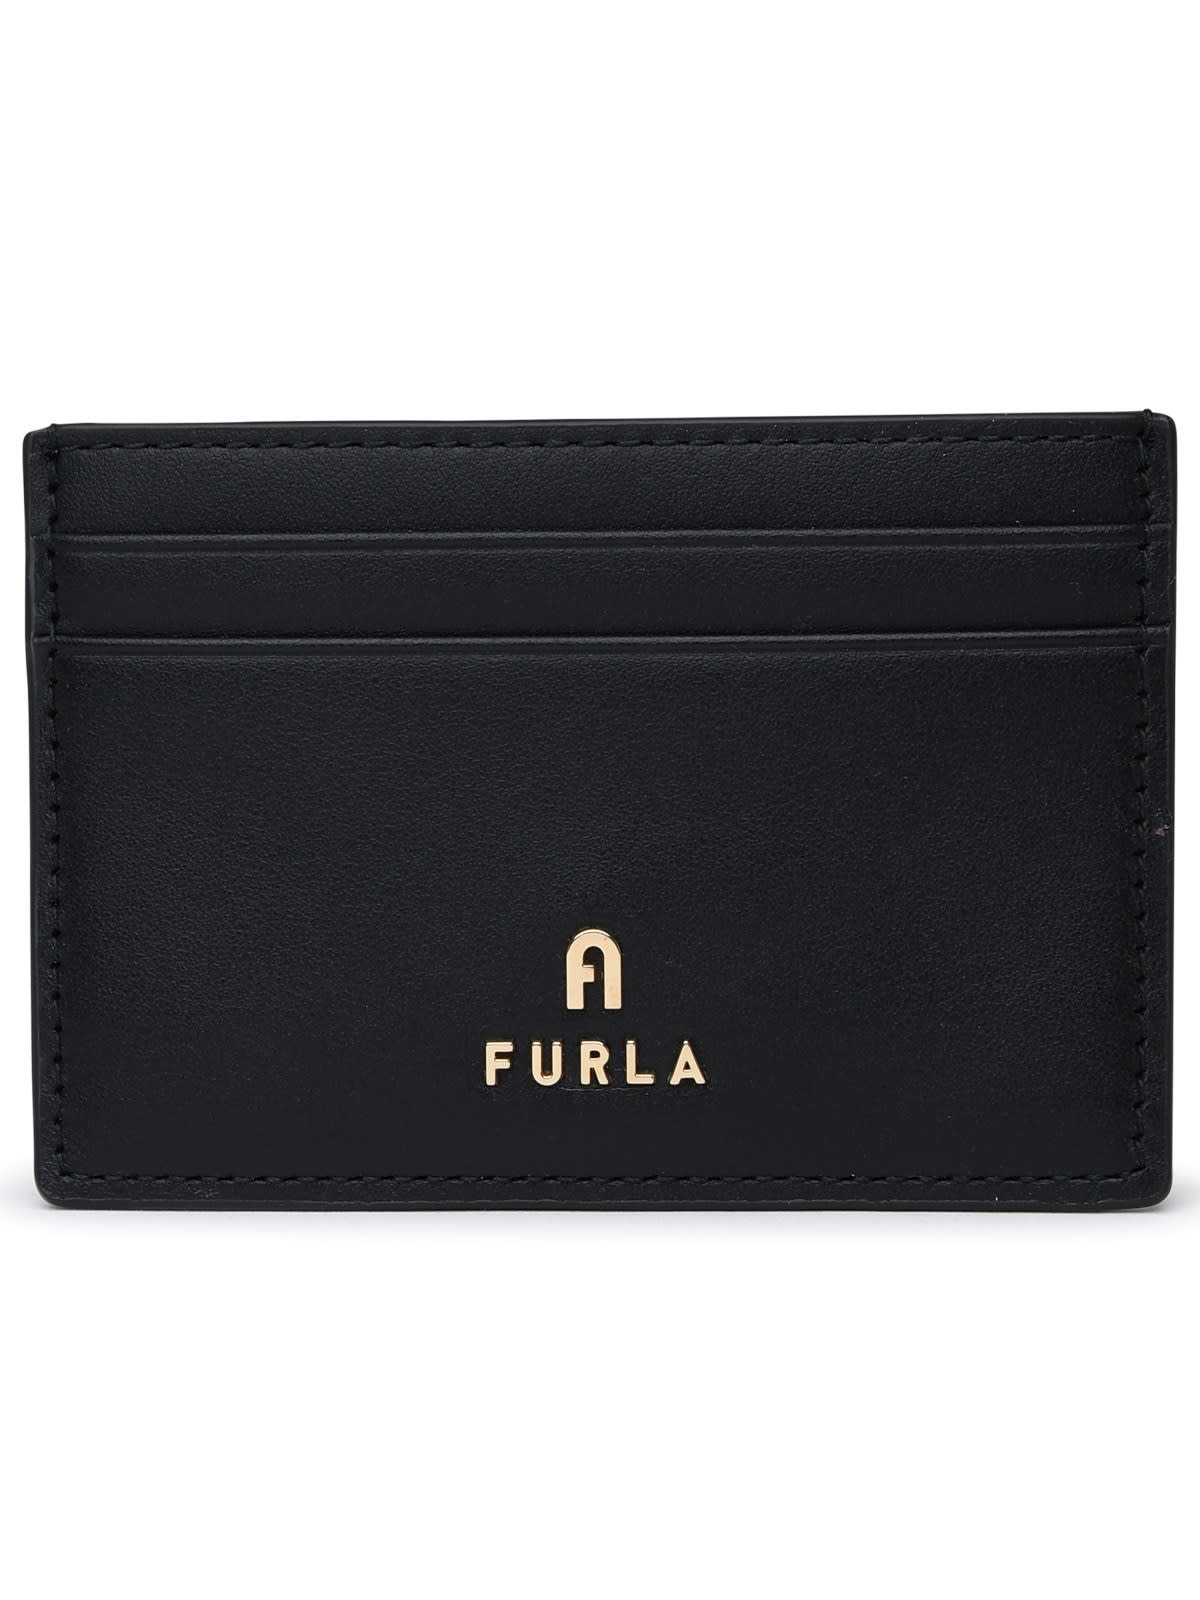 Shop Furla Black Leather Camelia Card Holder